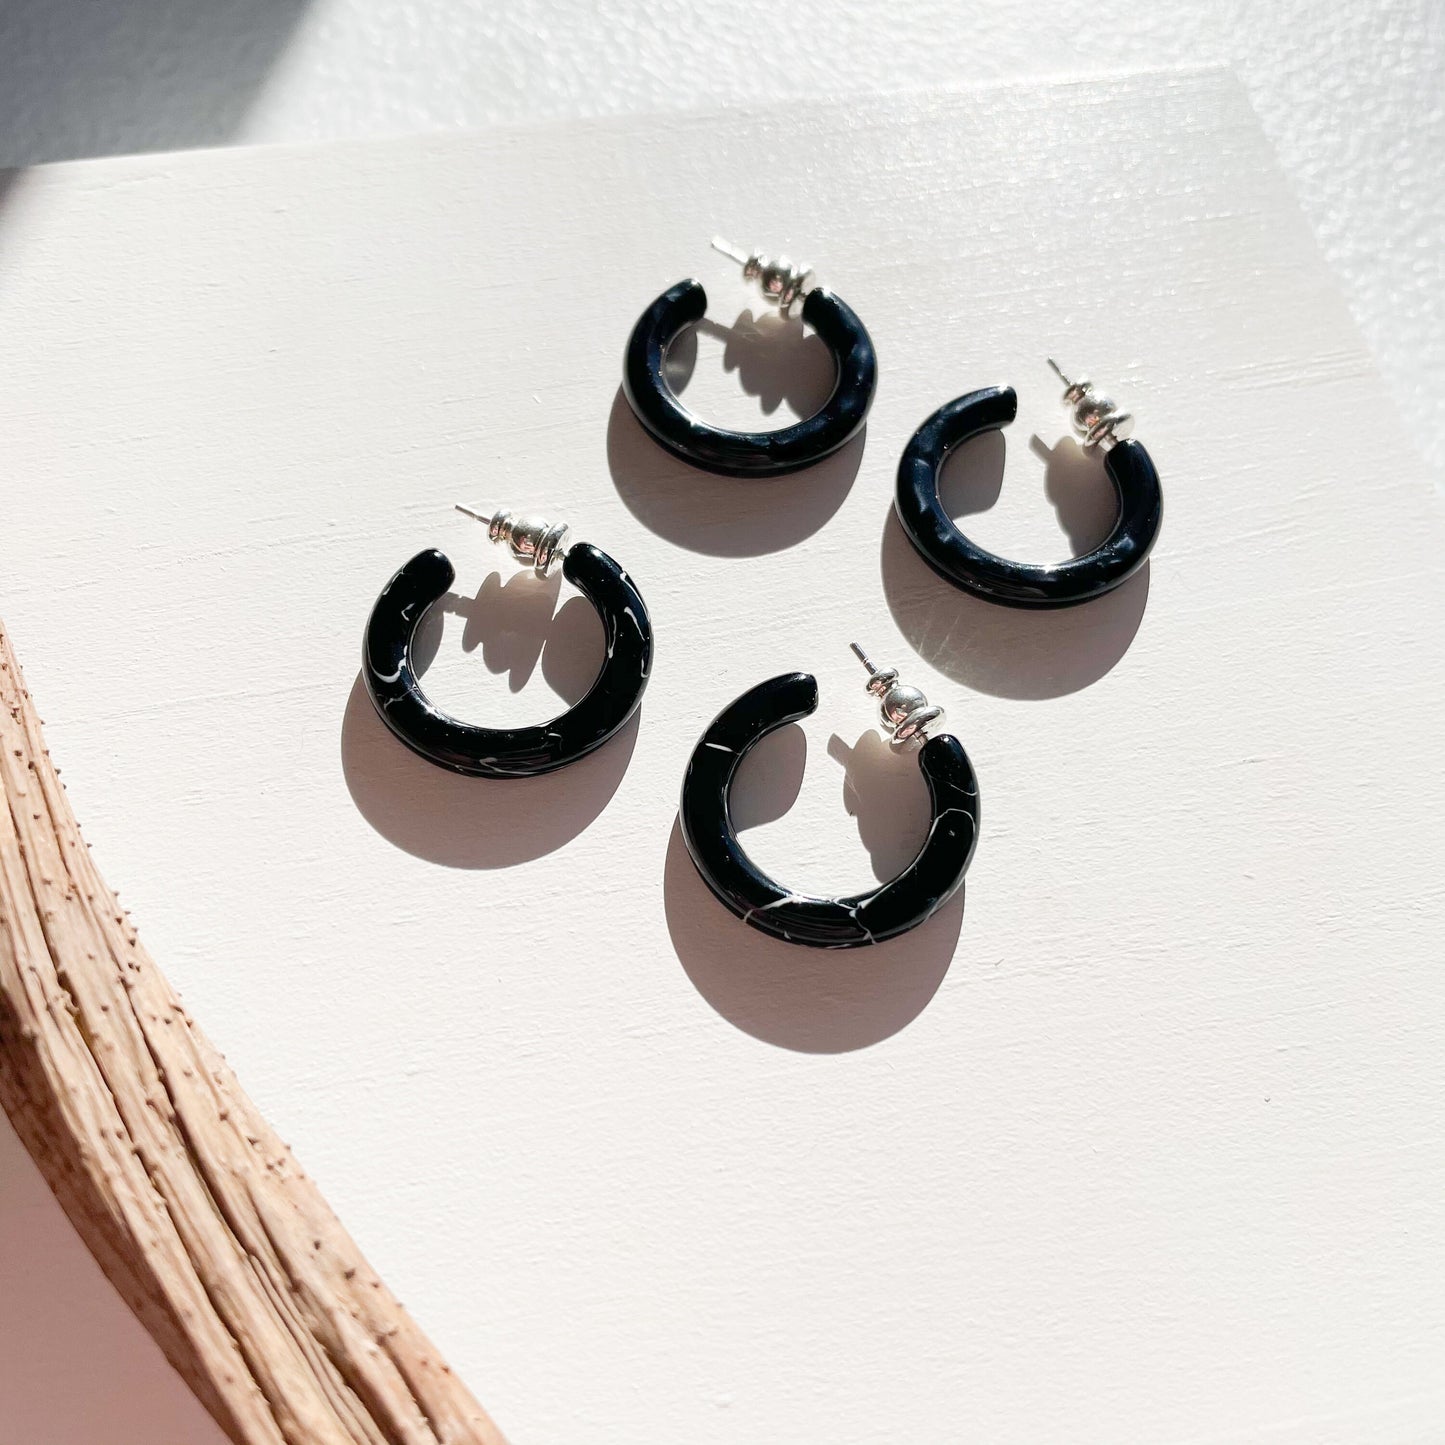 Ultra Mini Hoops in Black Pearl and Obsidian | Small Mini Black Hoop Earrings 925 Silver Posts